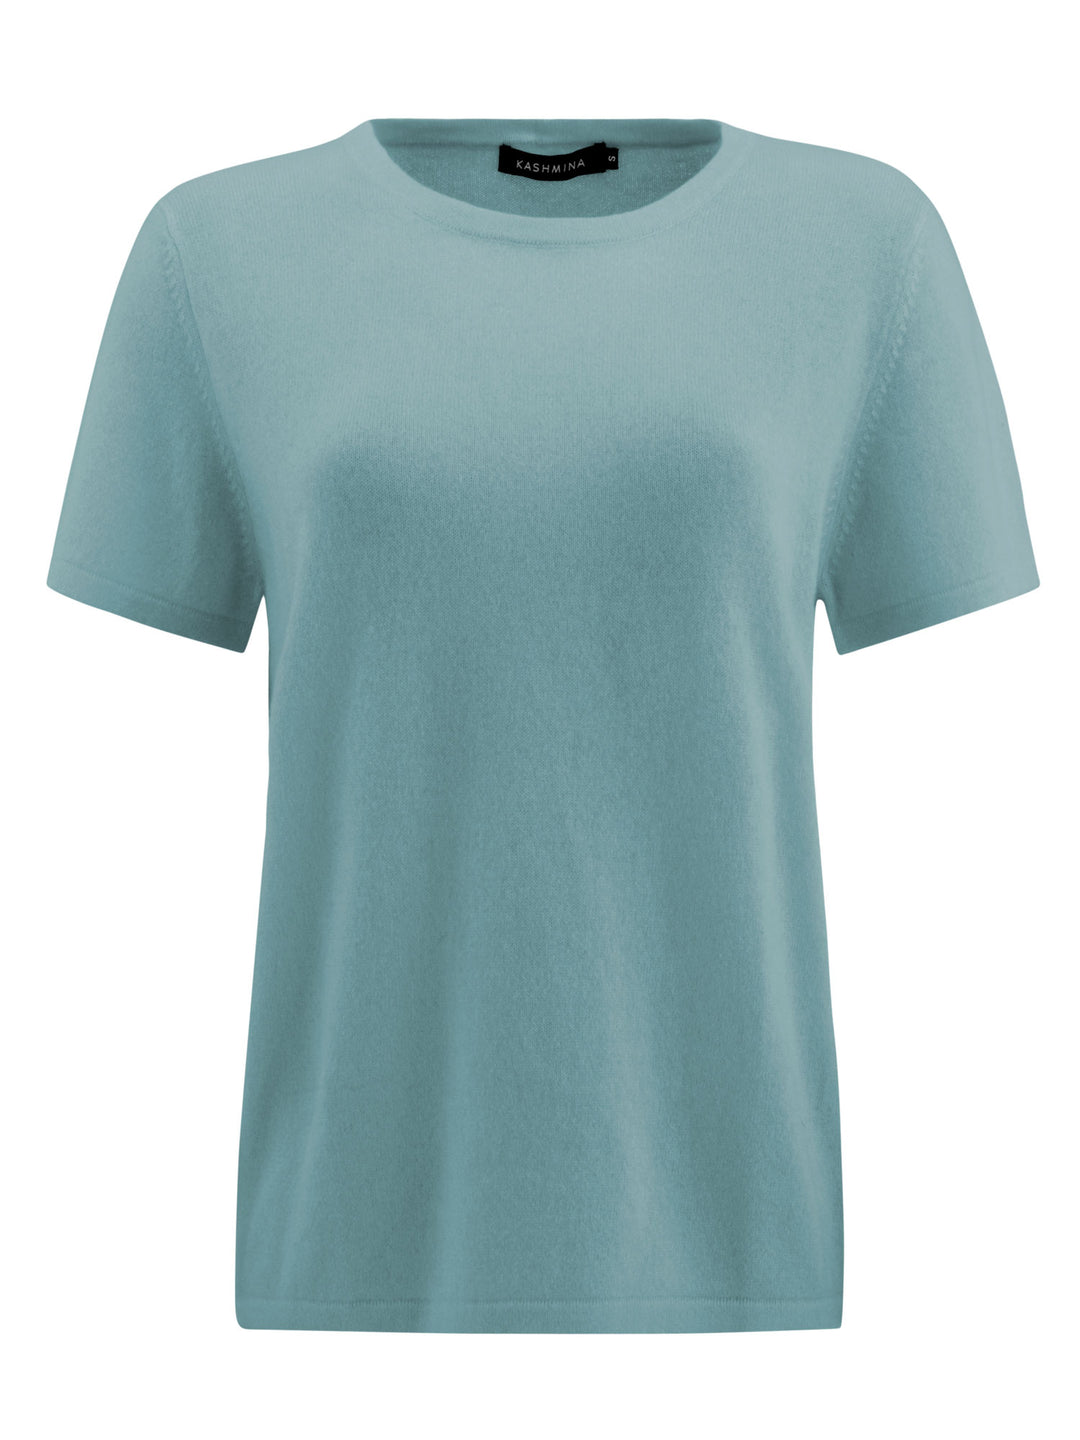 cashmere t-shirt tee shirt arctic sustainable fashion luxury quality norwegian design